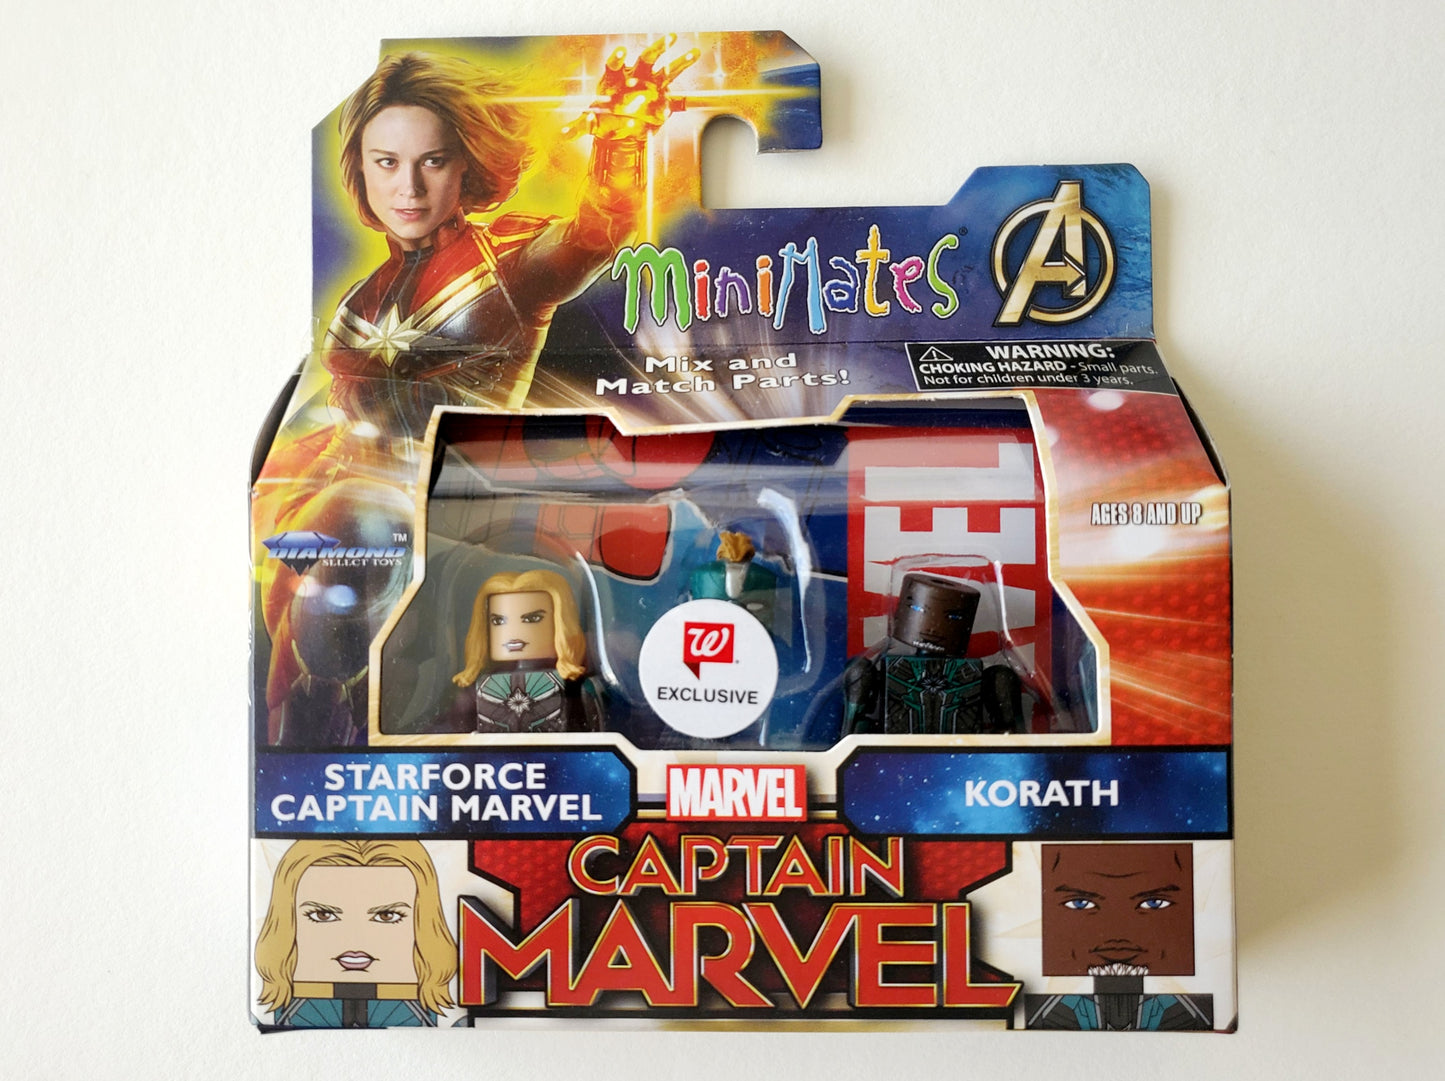 Captain Marvel Minimates Walgreens Exclusive Starforce Captain Marvel & Korath